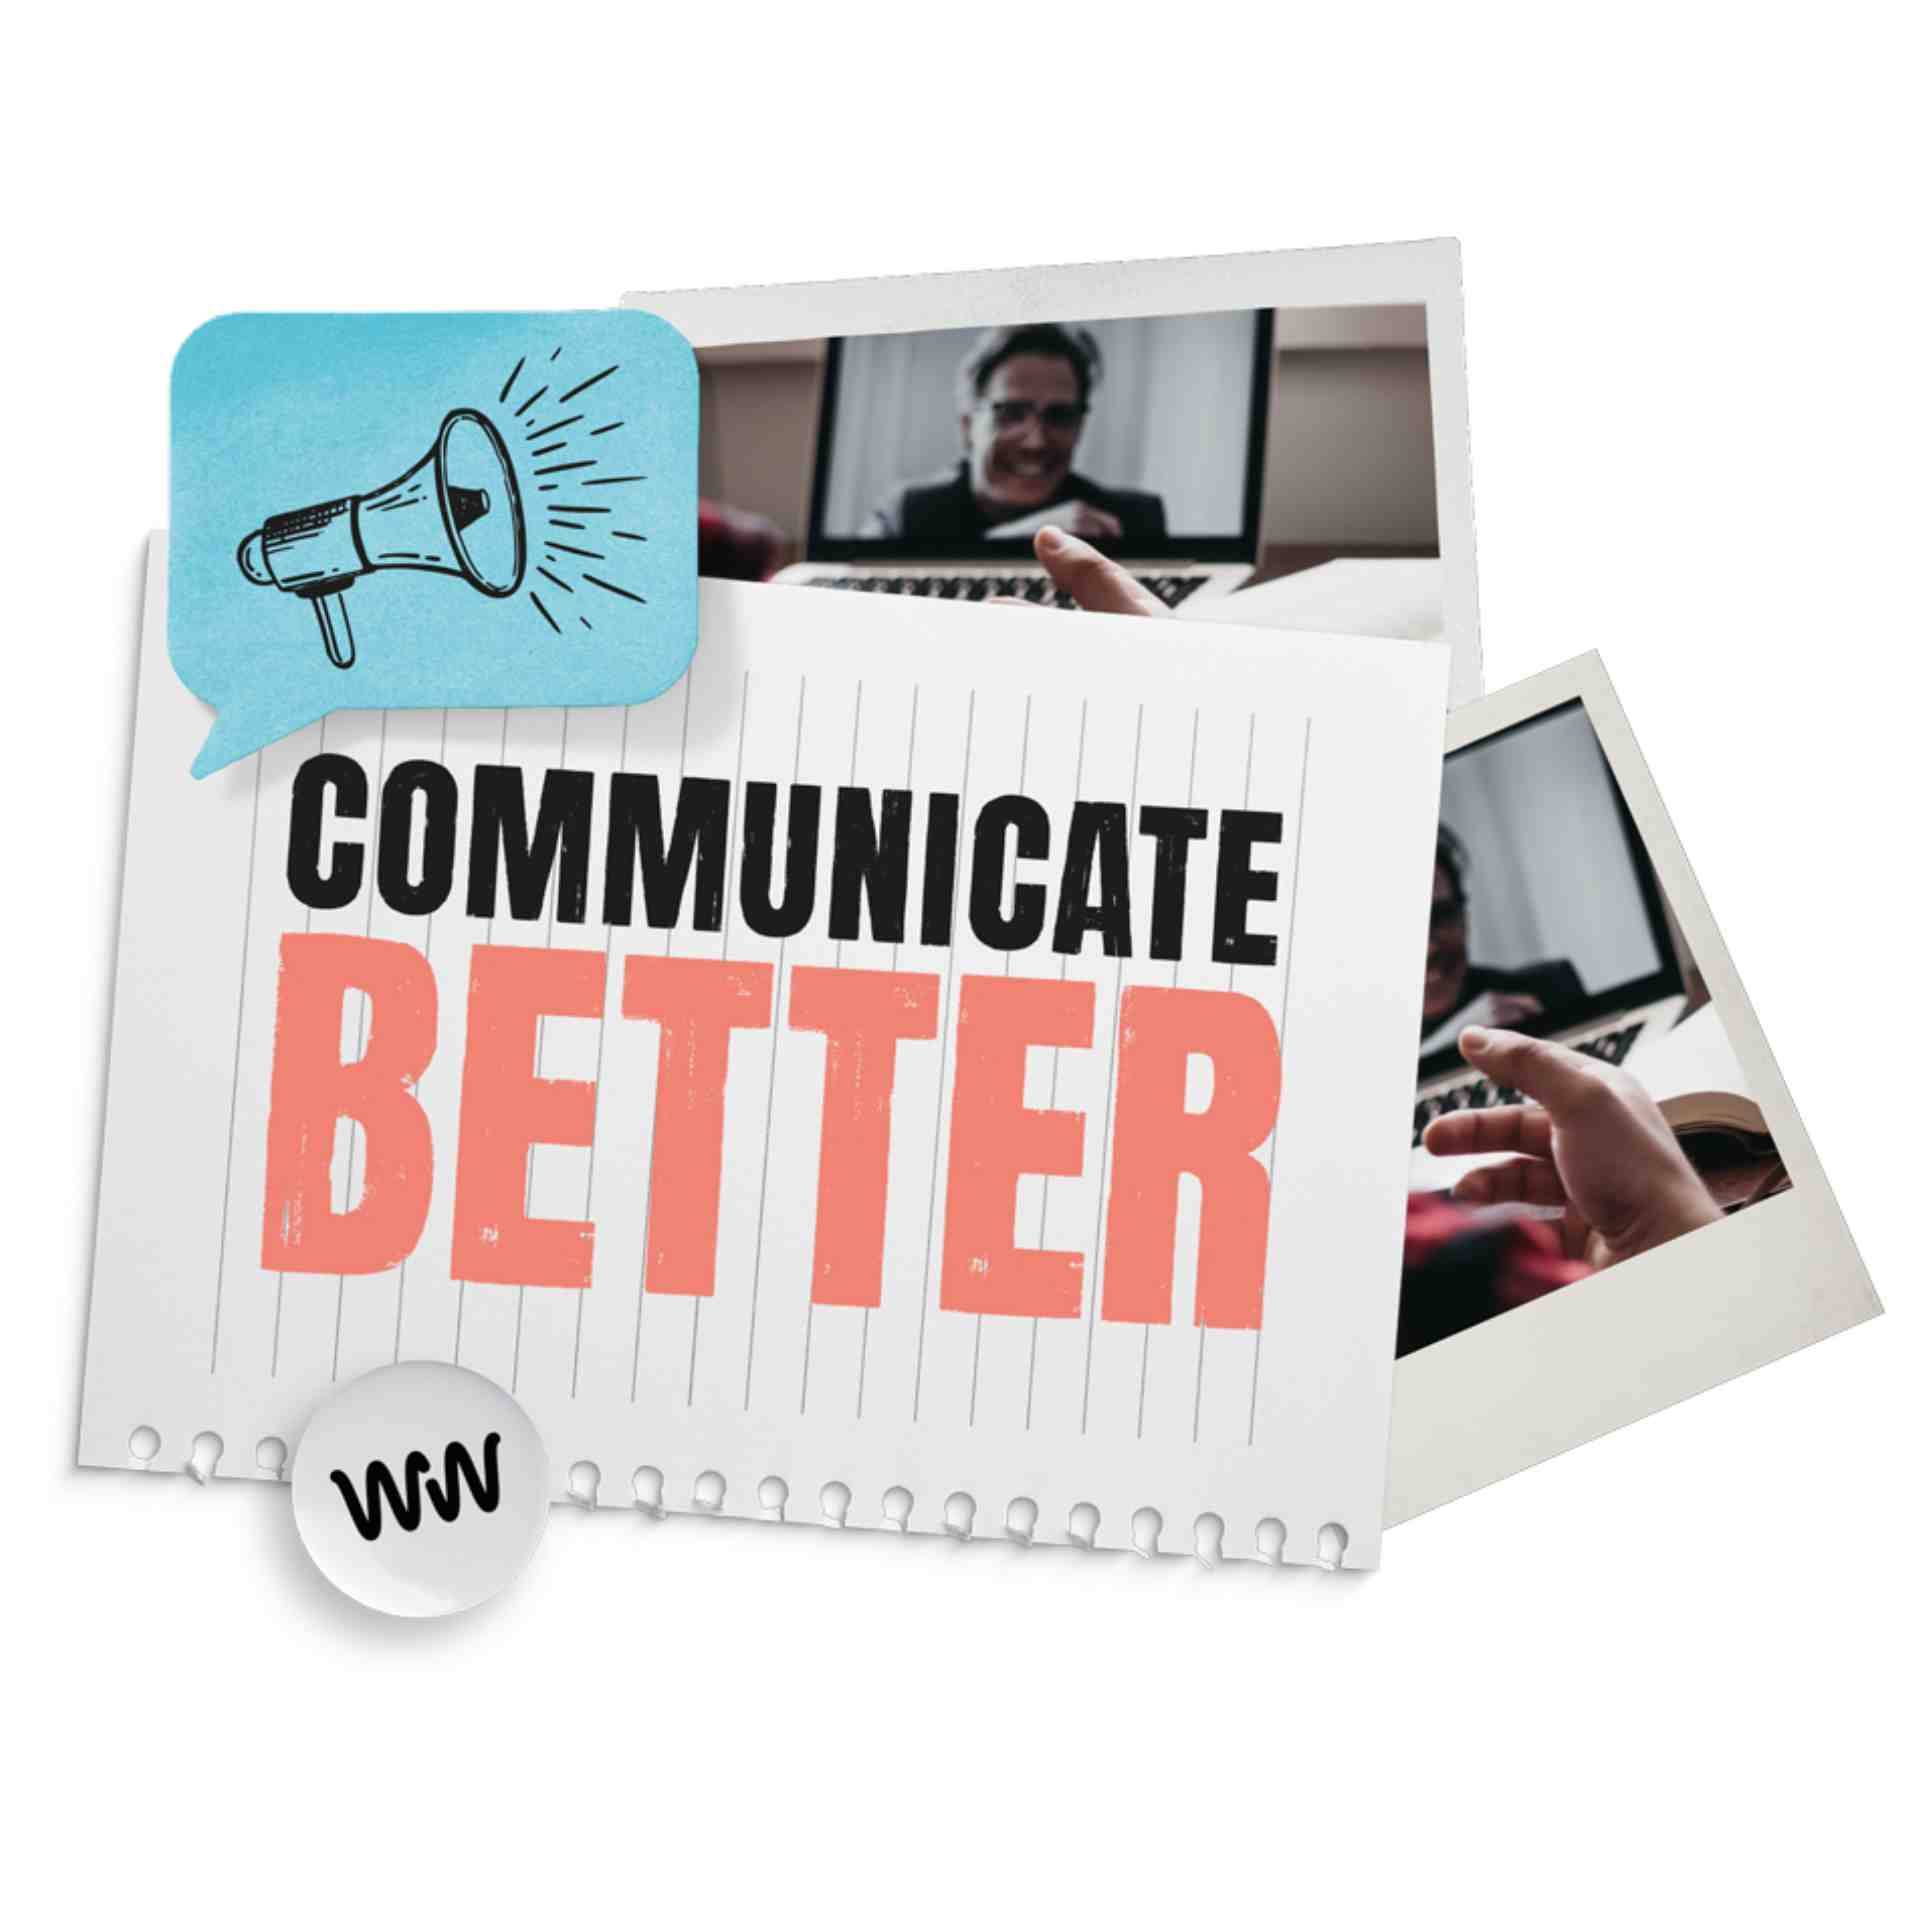 Communicate better - Winston's Wish